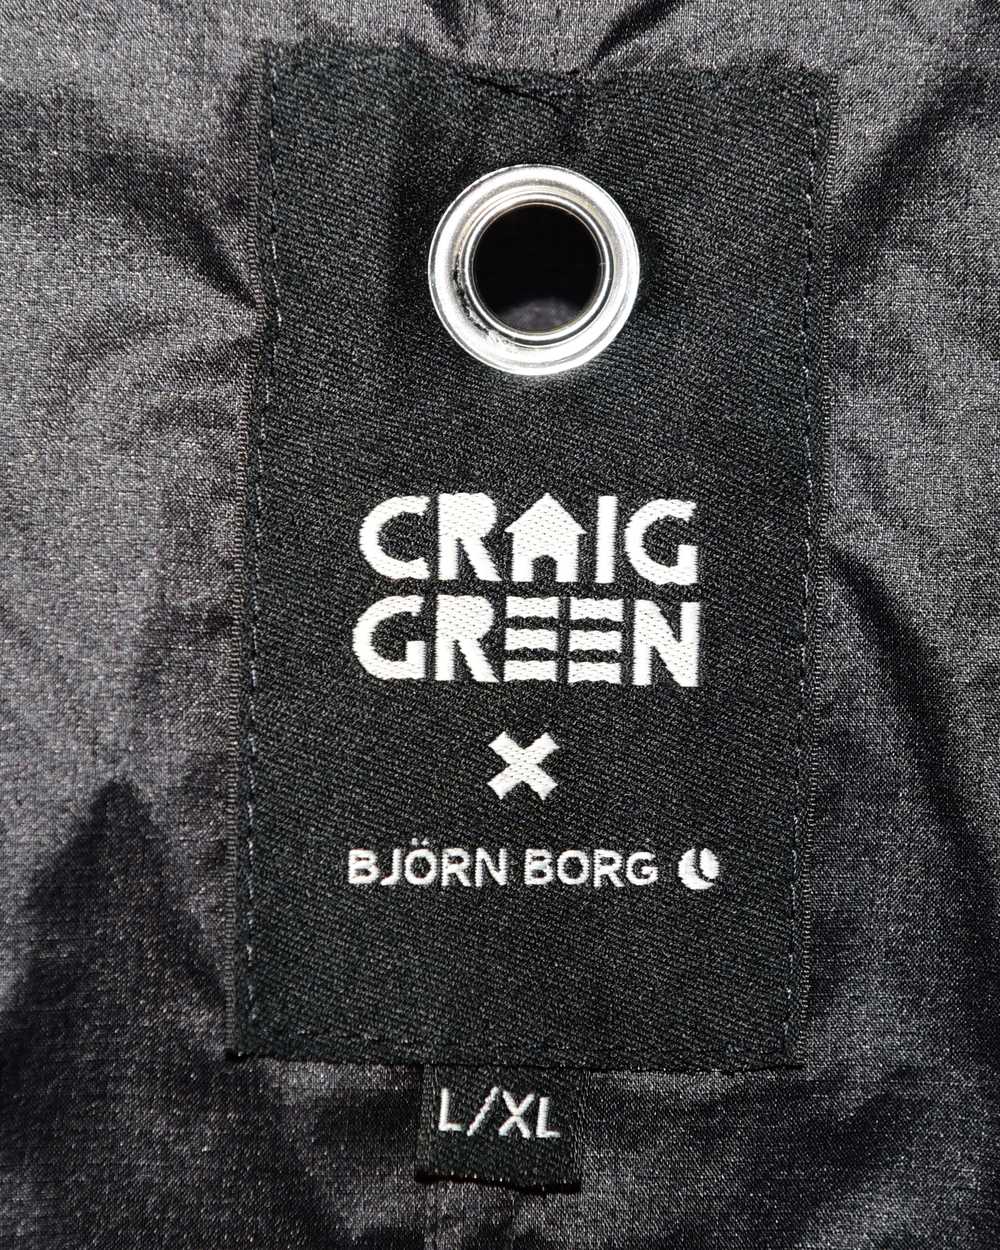 Craig Green Bjorn Borg Green Shell Parka - image 11